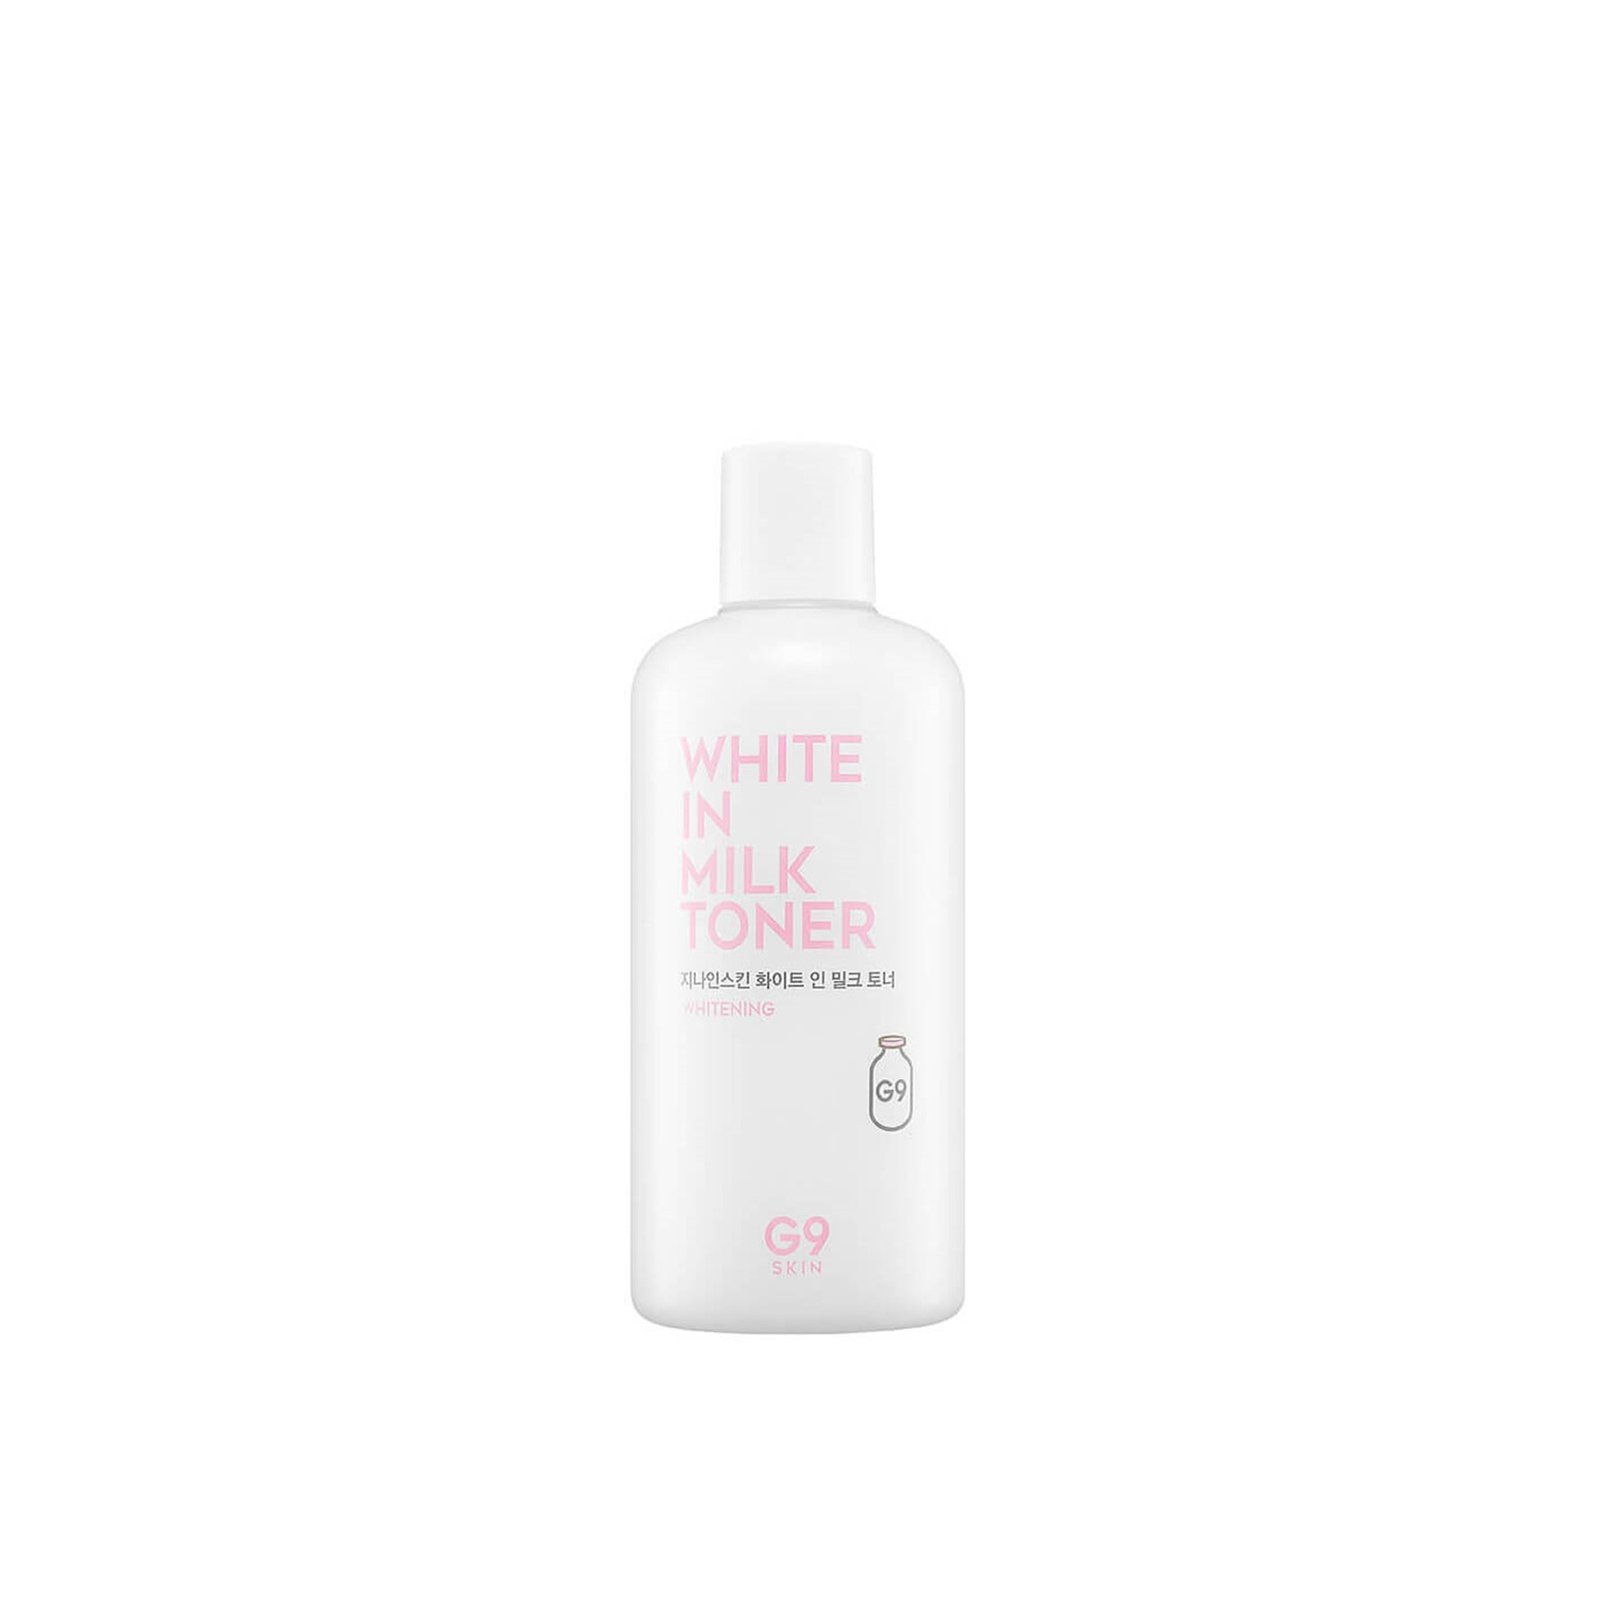 G9 Skin White in Milk Toner 50ml (1.69 fl oz)